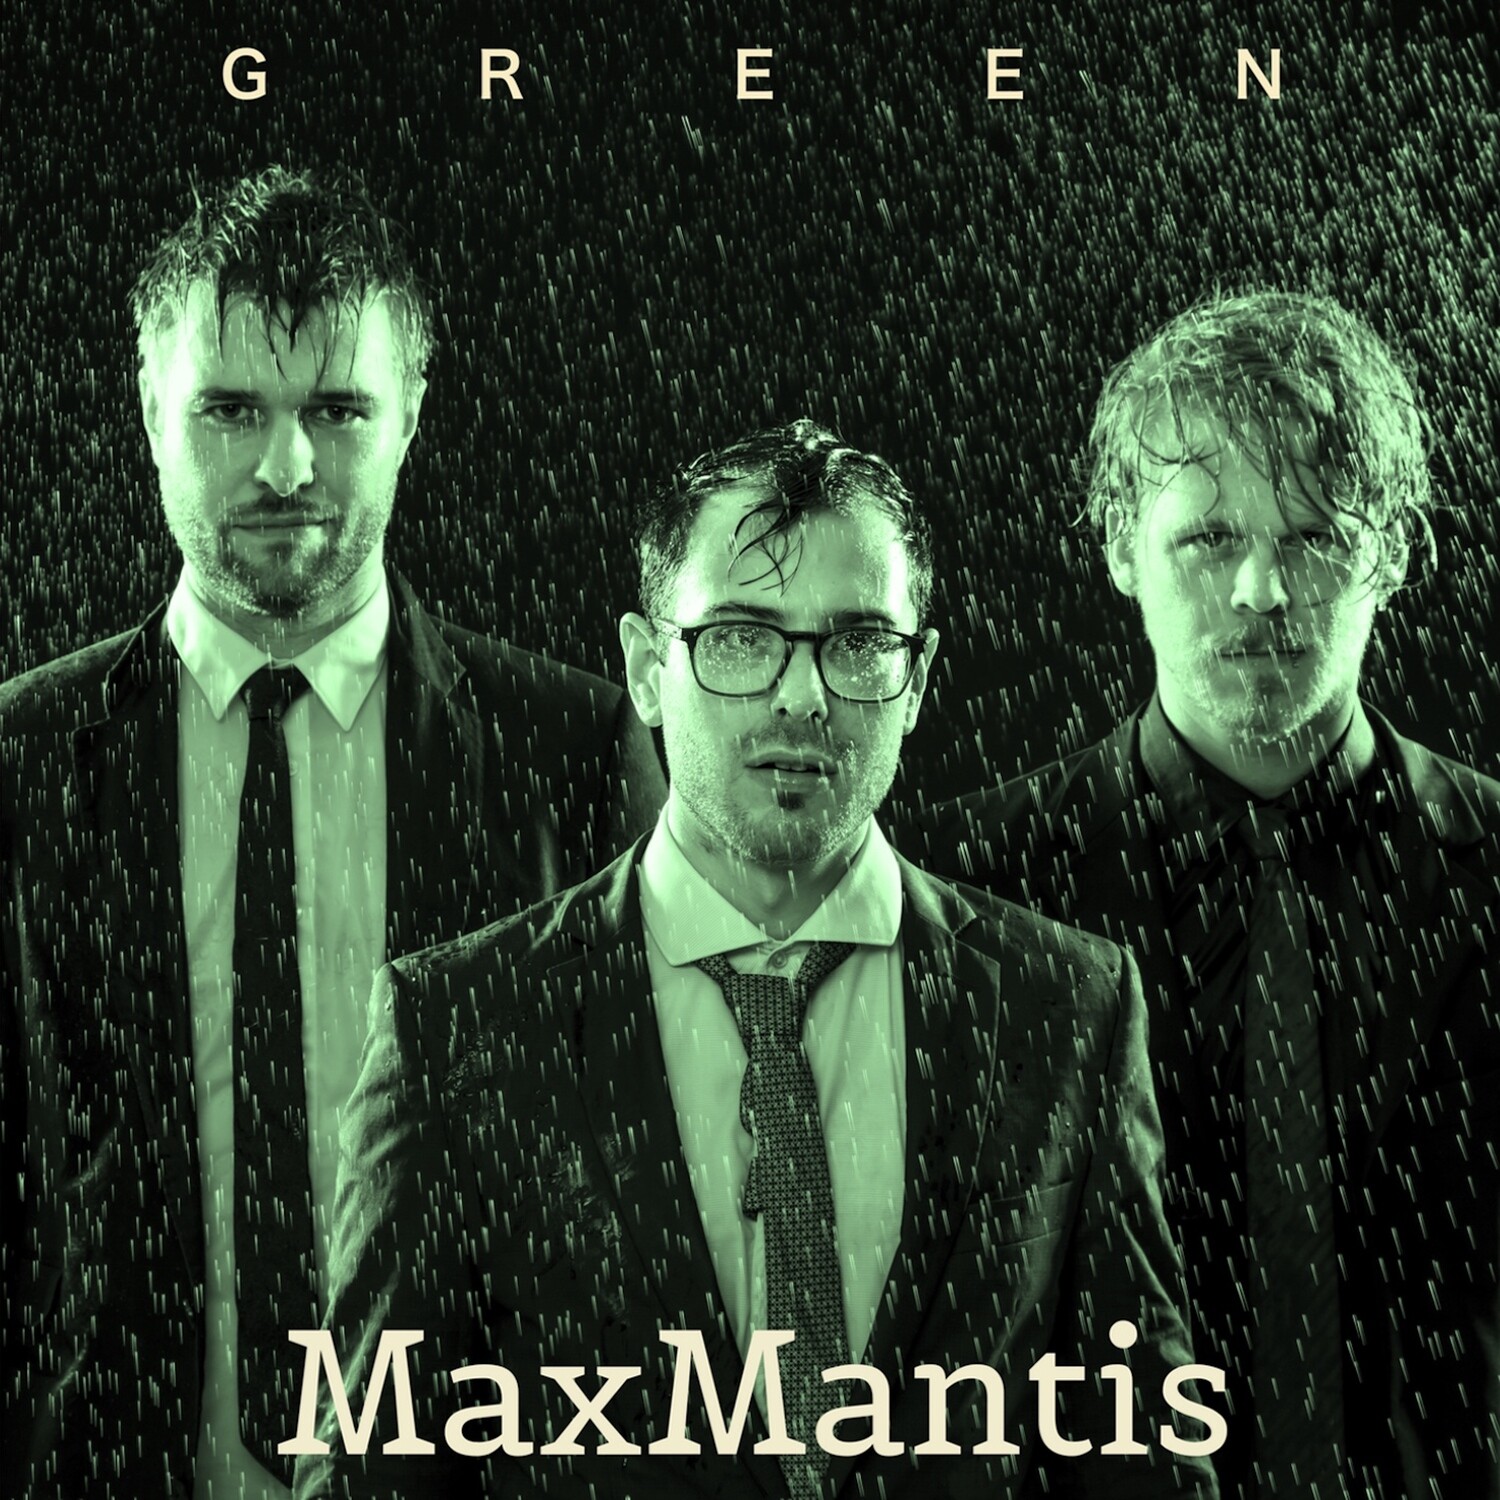 GREEN (Vinyl, 180g, 2018)